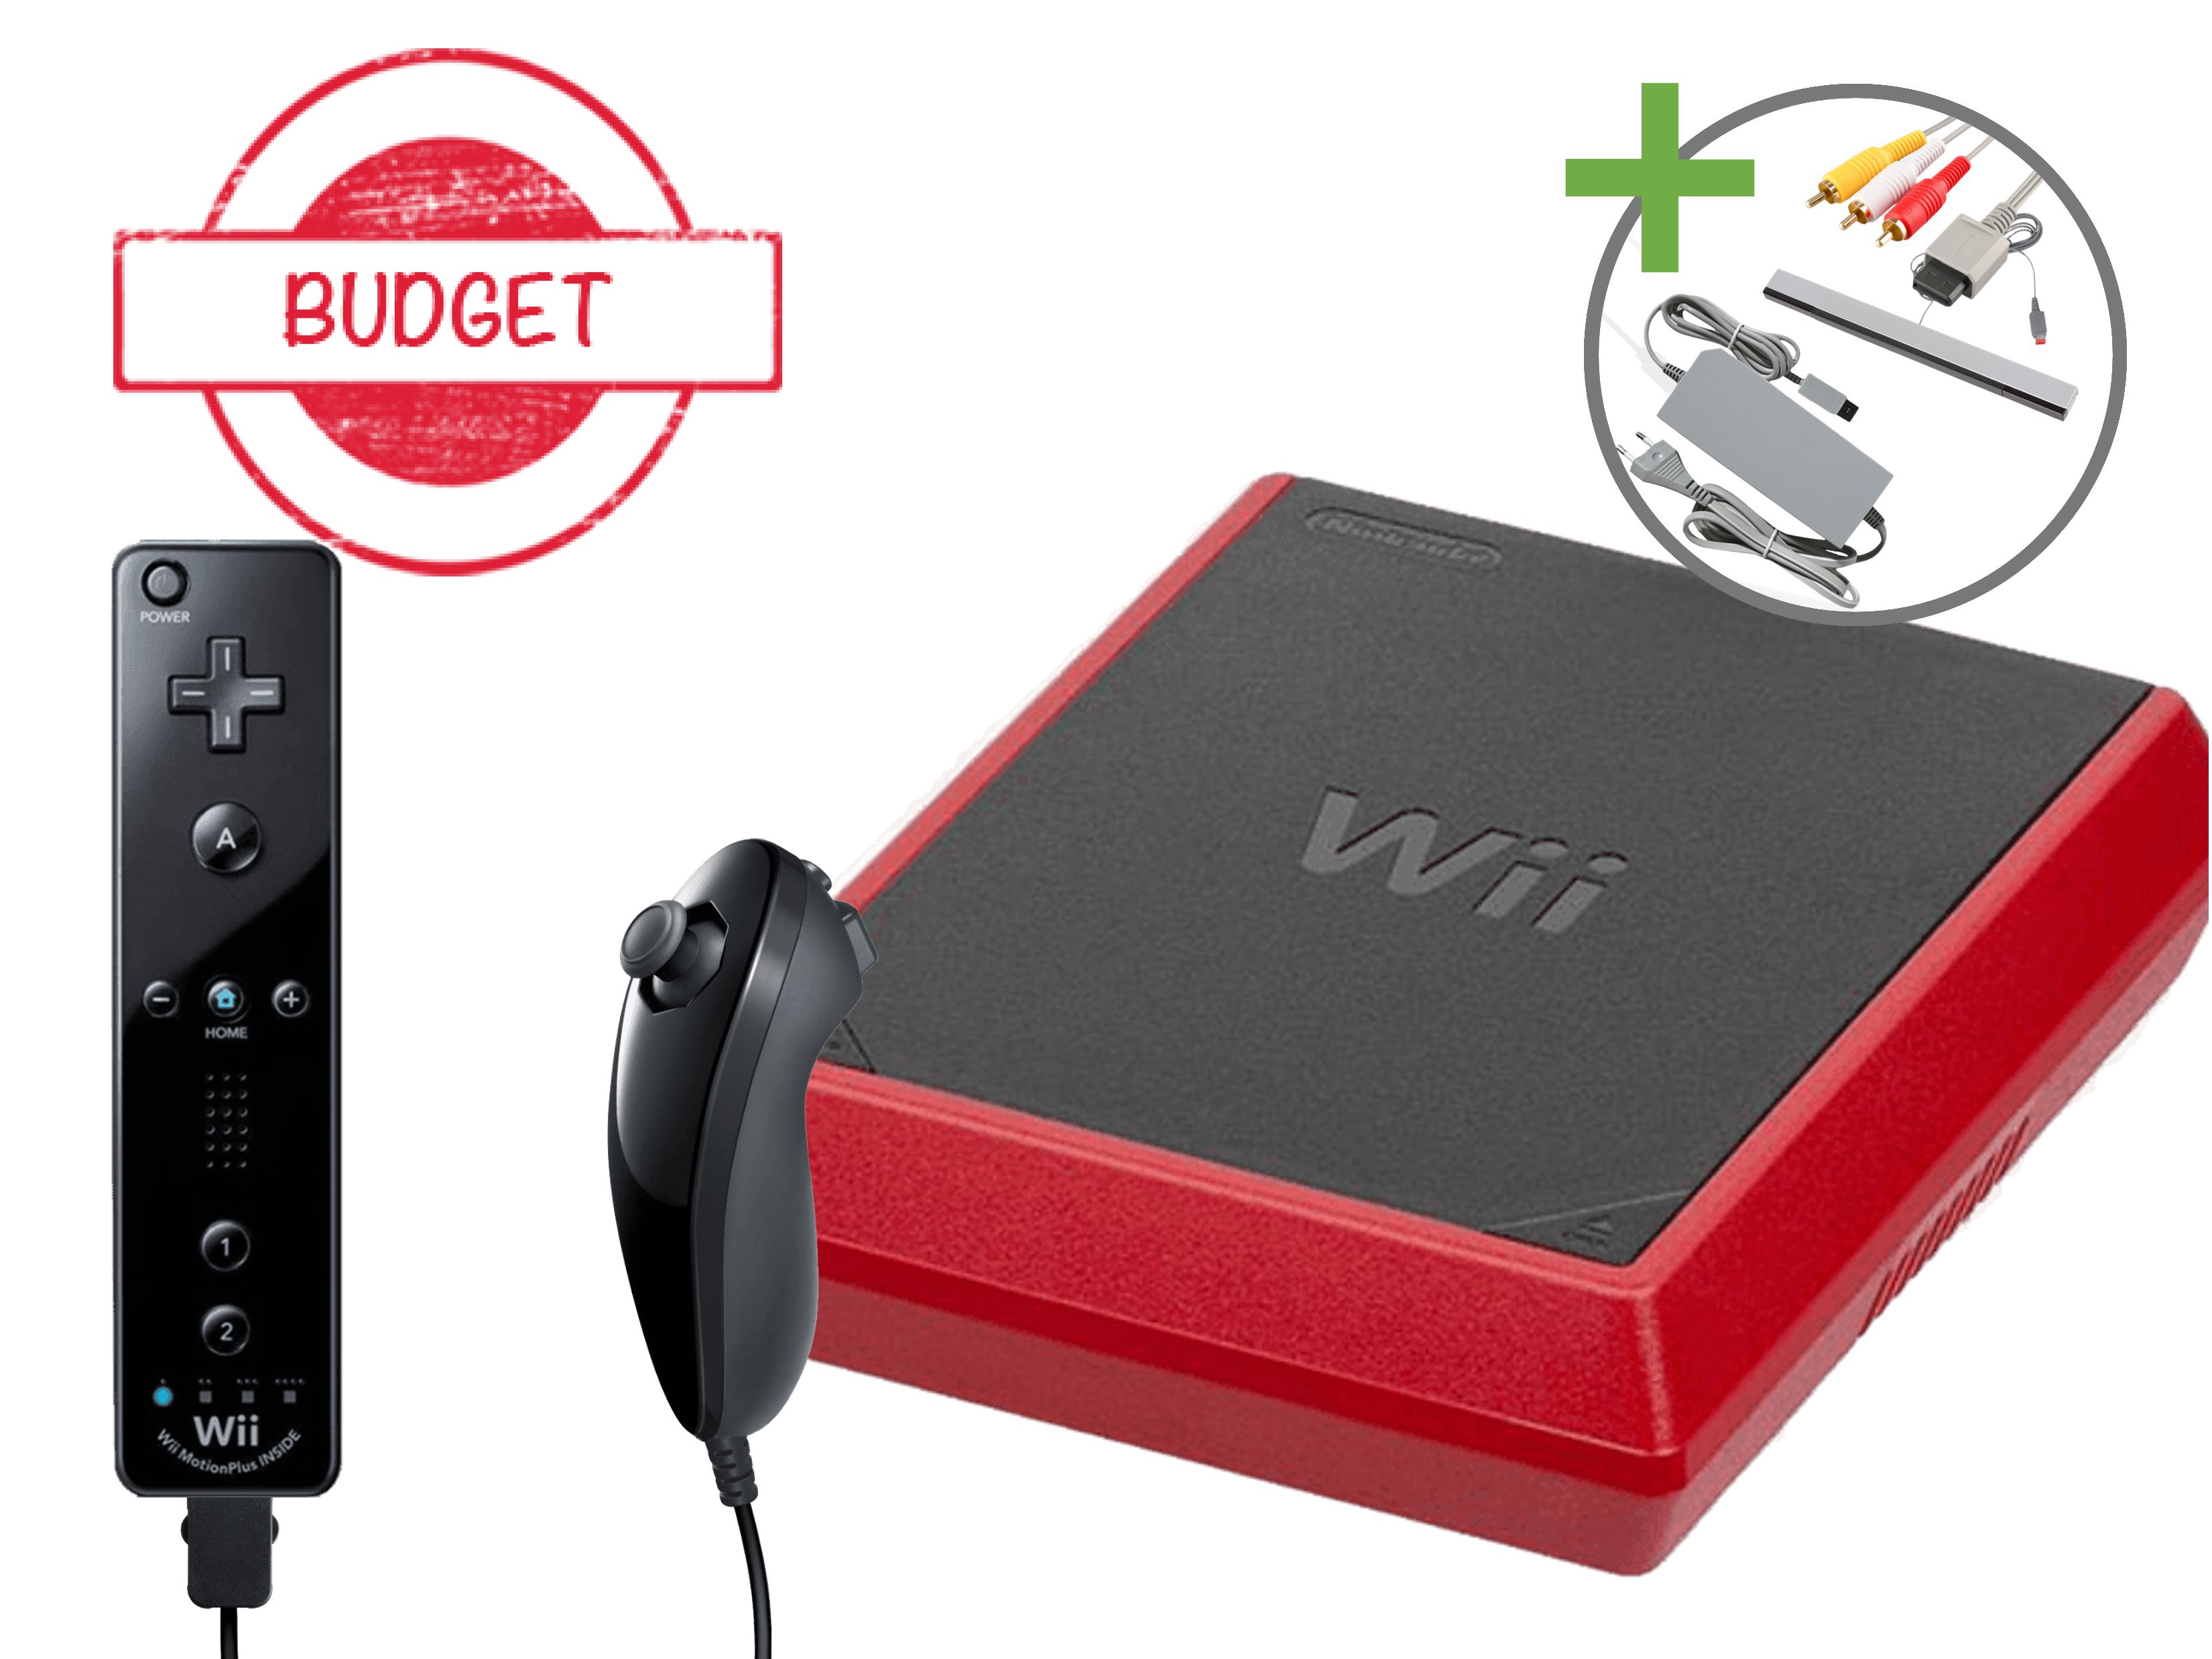 Nintendo Wii Mini Starter Pack - Motion Plus Black Edition - Budget Kopen | Wii Hardware